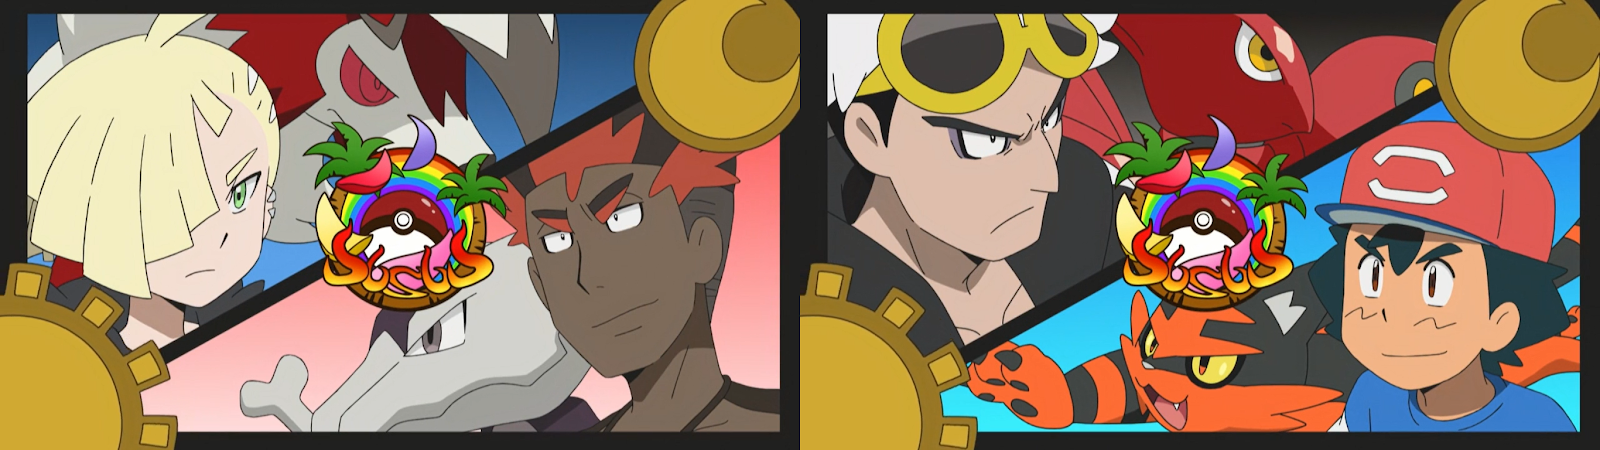 Anime Sun & Moon: Oitavas de Final da Liga Alola - Pokémothim